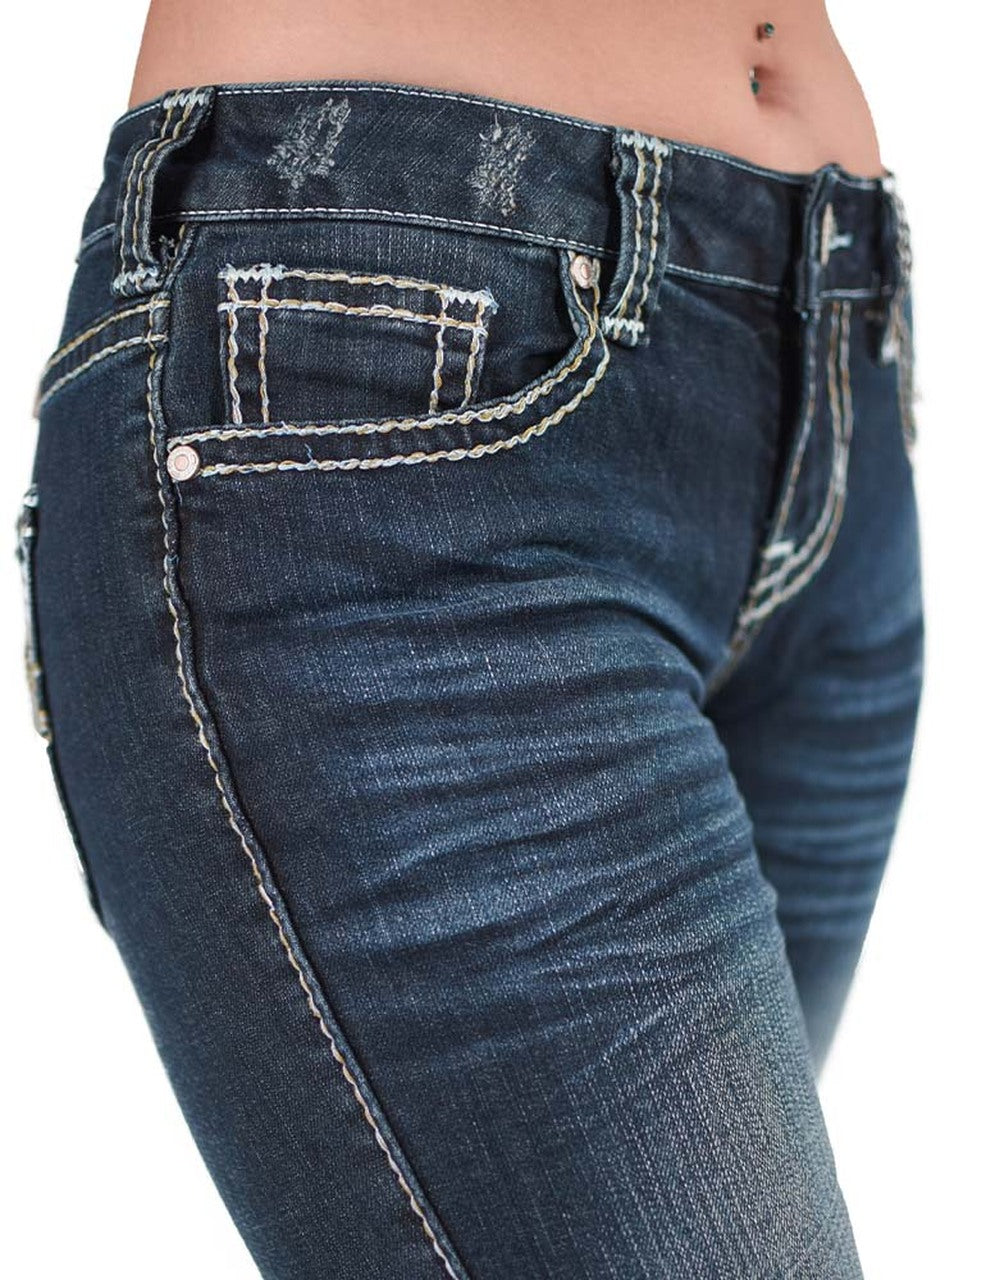 'High Standard' Classic UnBelievable Fit Bootcut Jeans